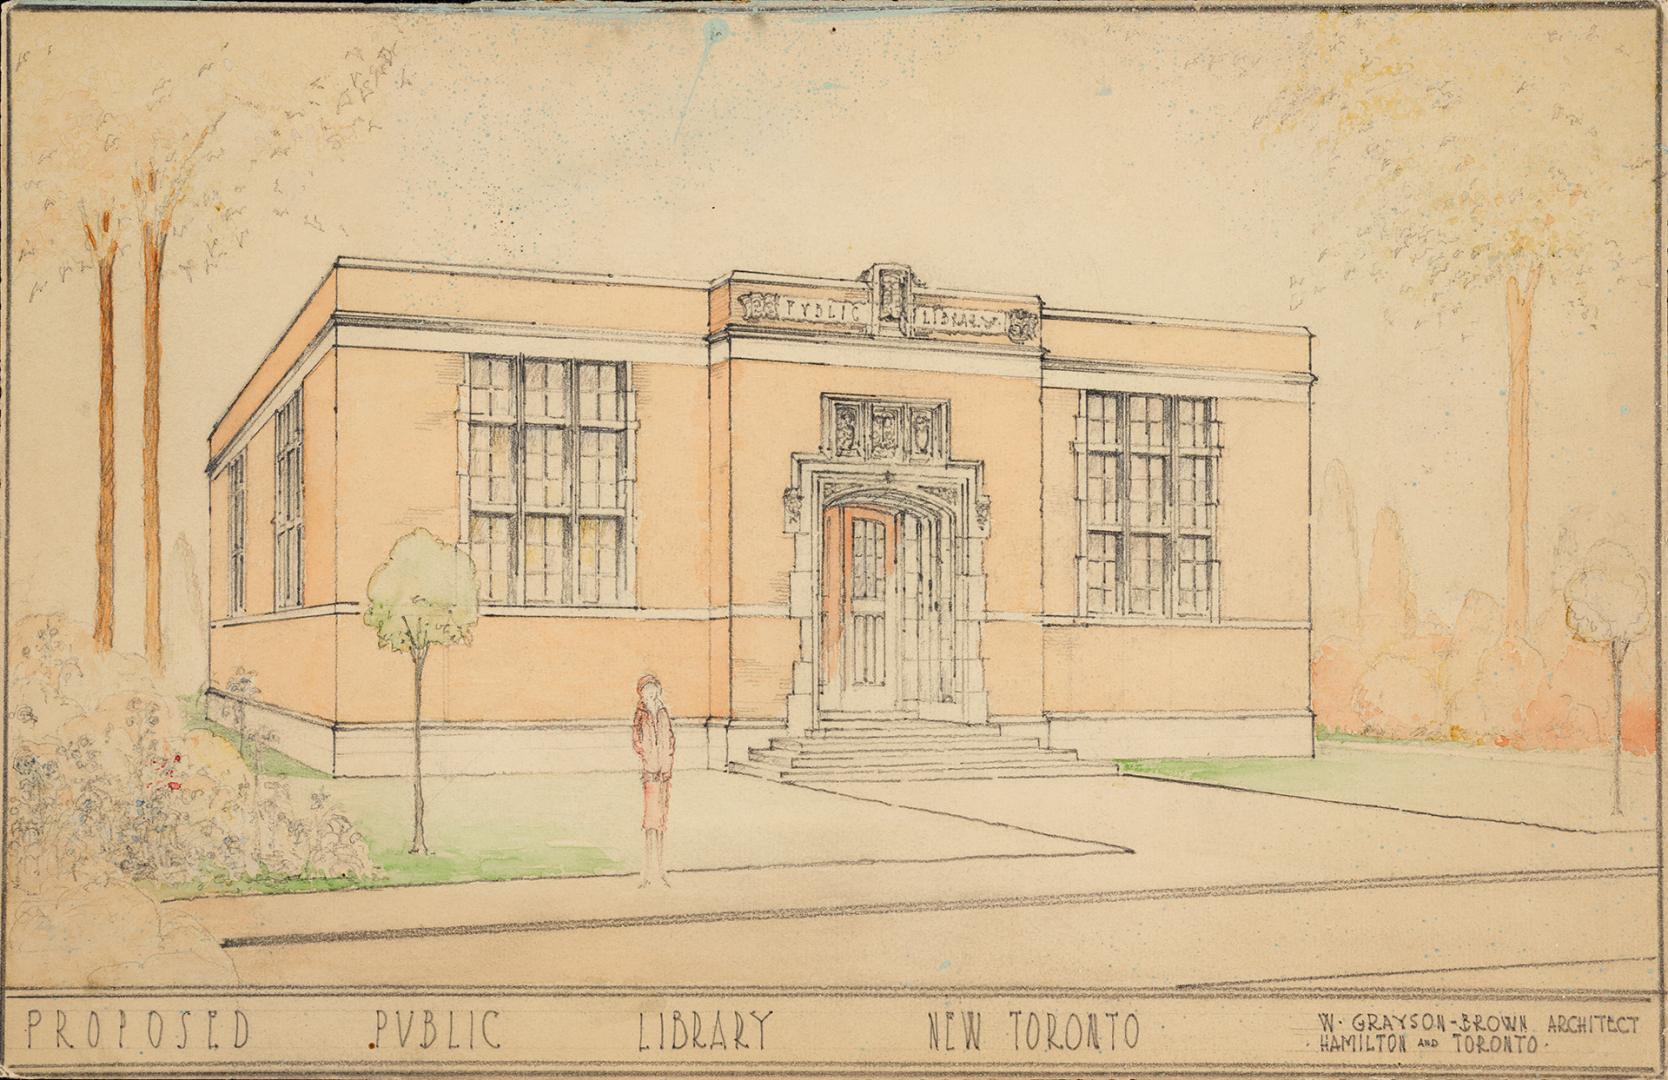 Proposed public library New Toronto W. Grayson-Brown Architect Hamilton and Toronto